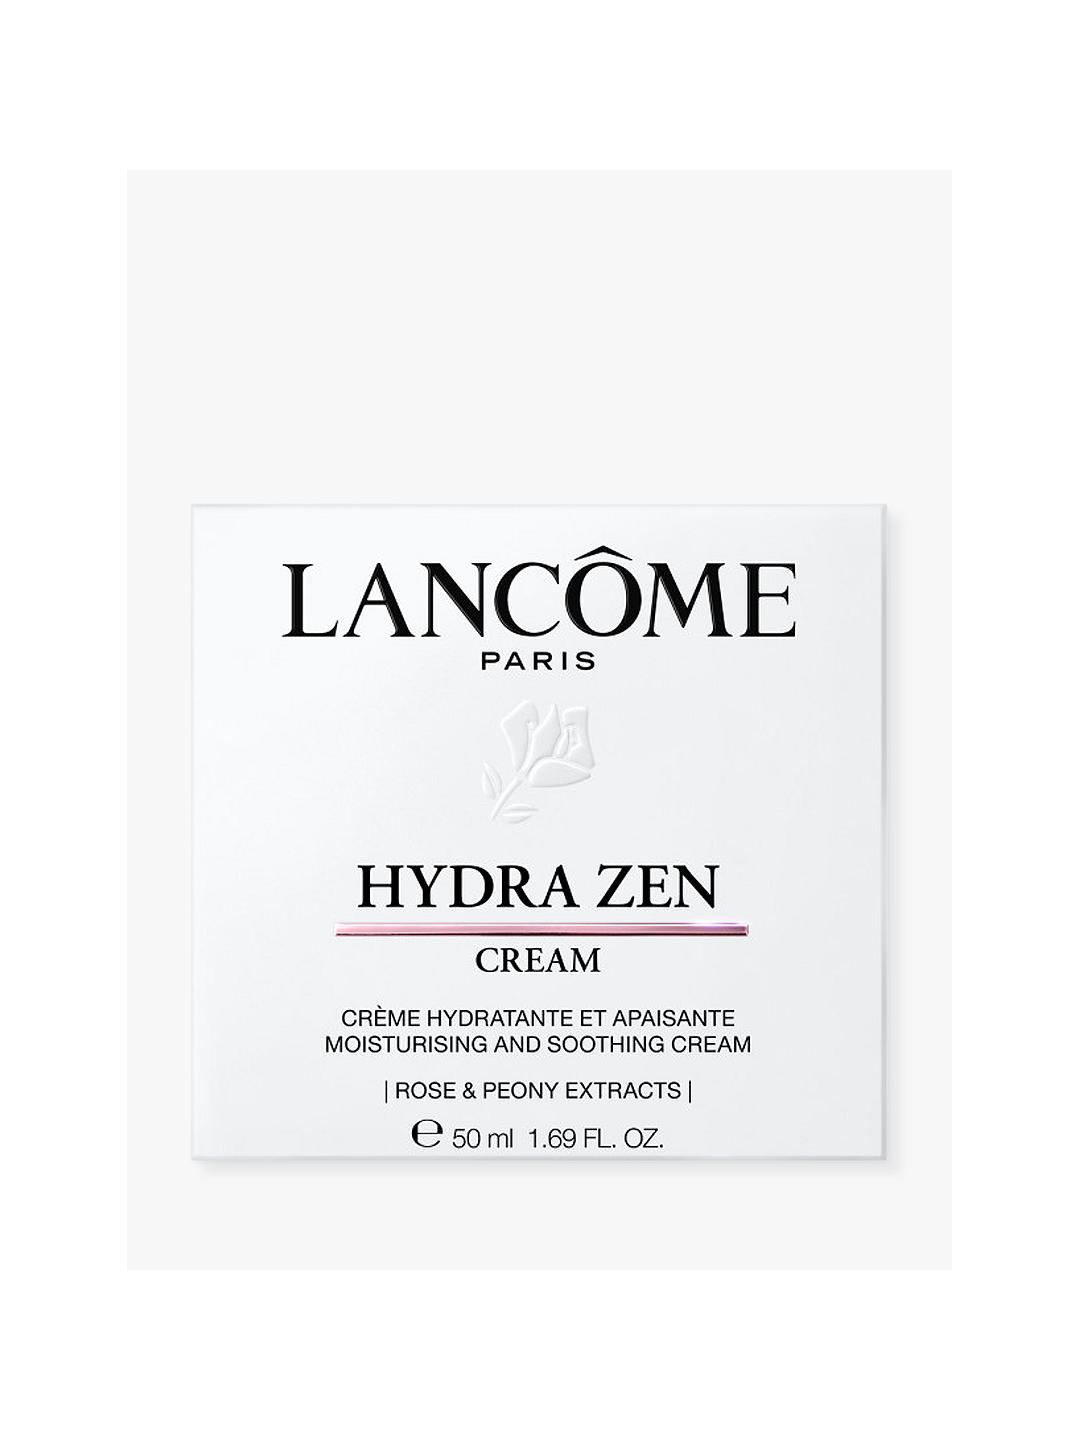 Lancome Hydrazen Cream, All Skin Types, 50ml 1